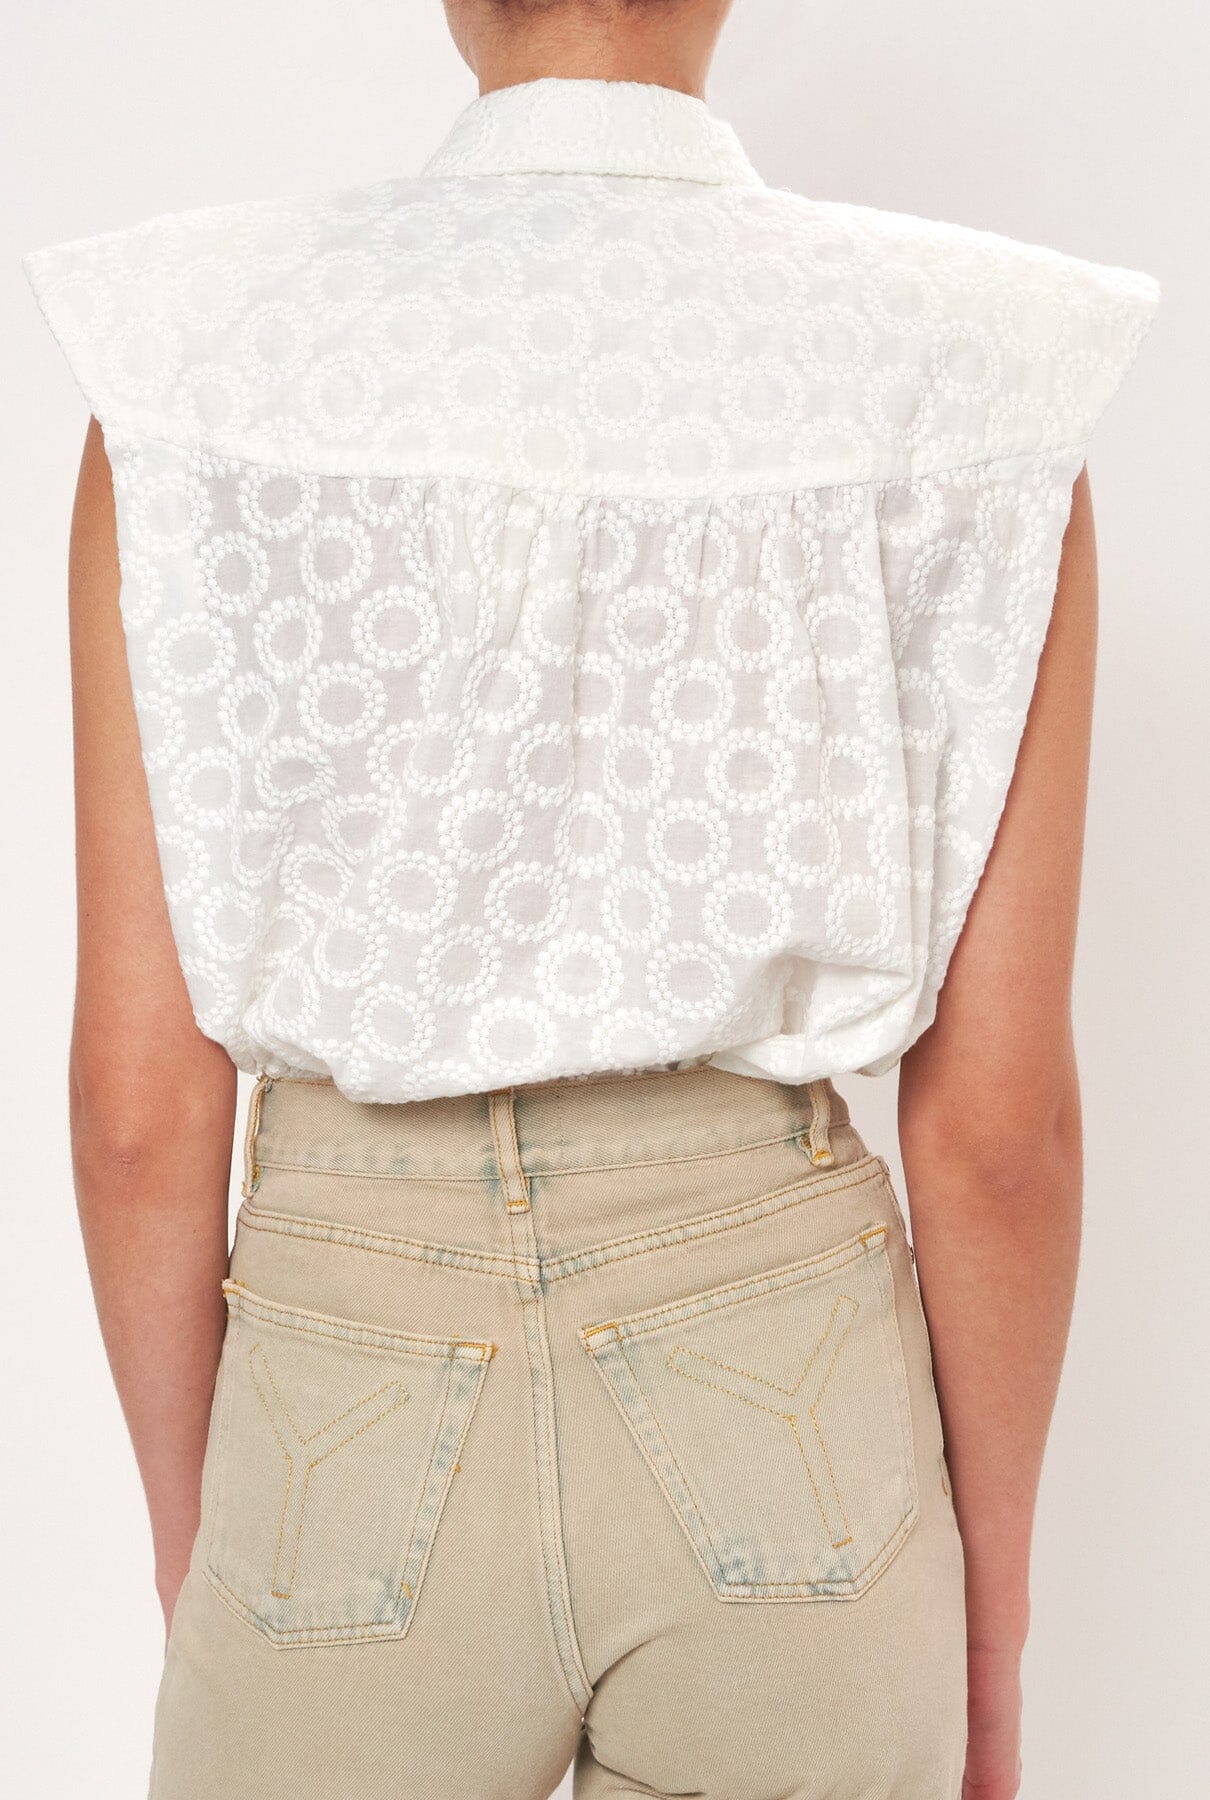 Miru Sleeveless Embroidery Shirts & blouses Julise Magon 